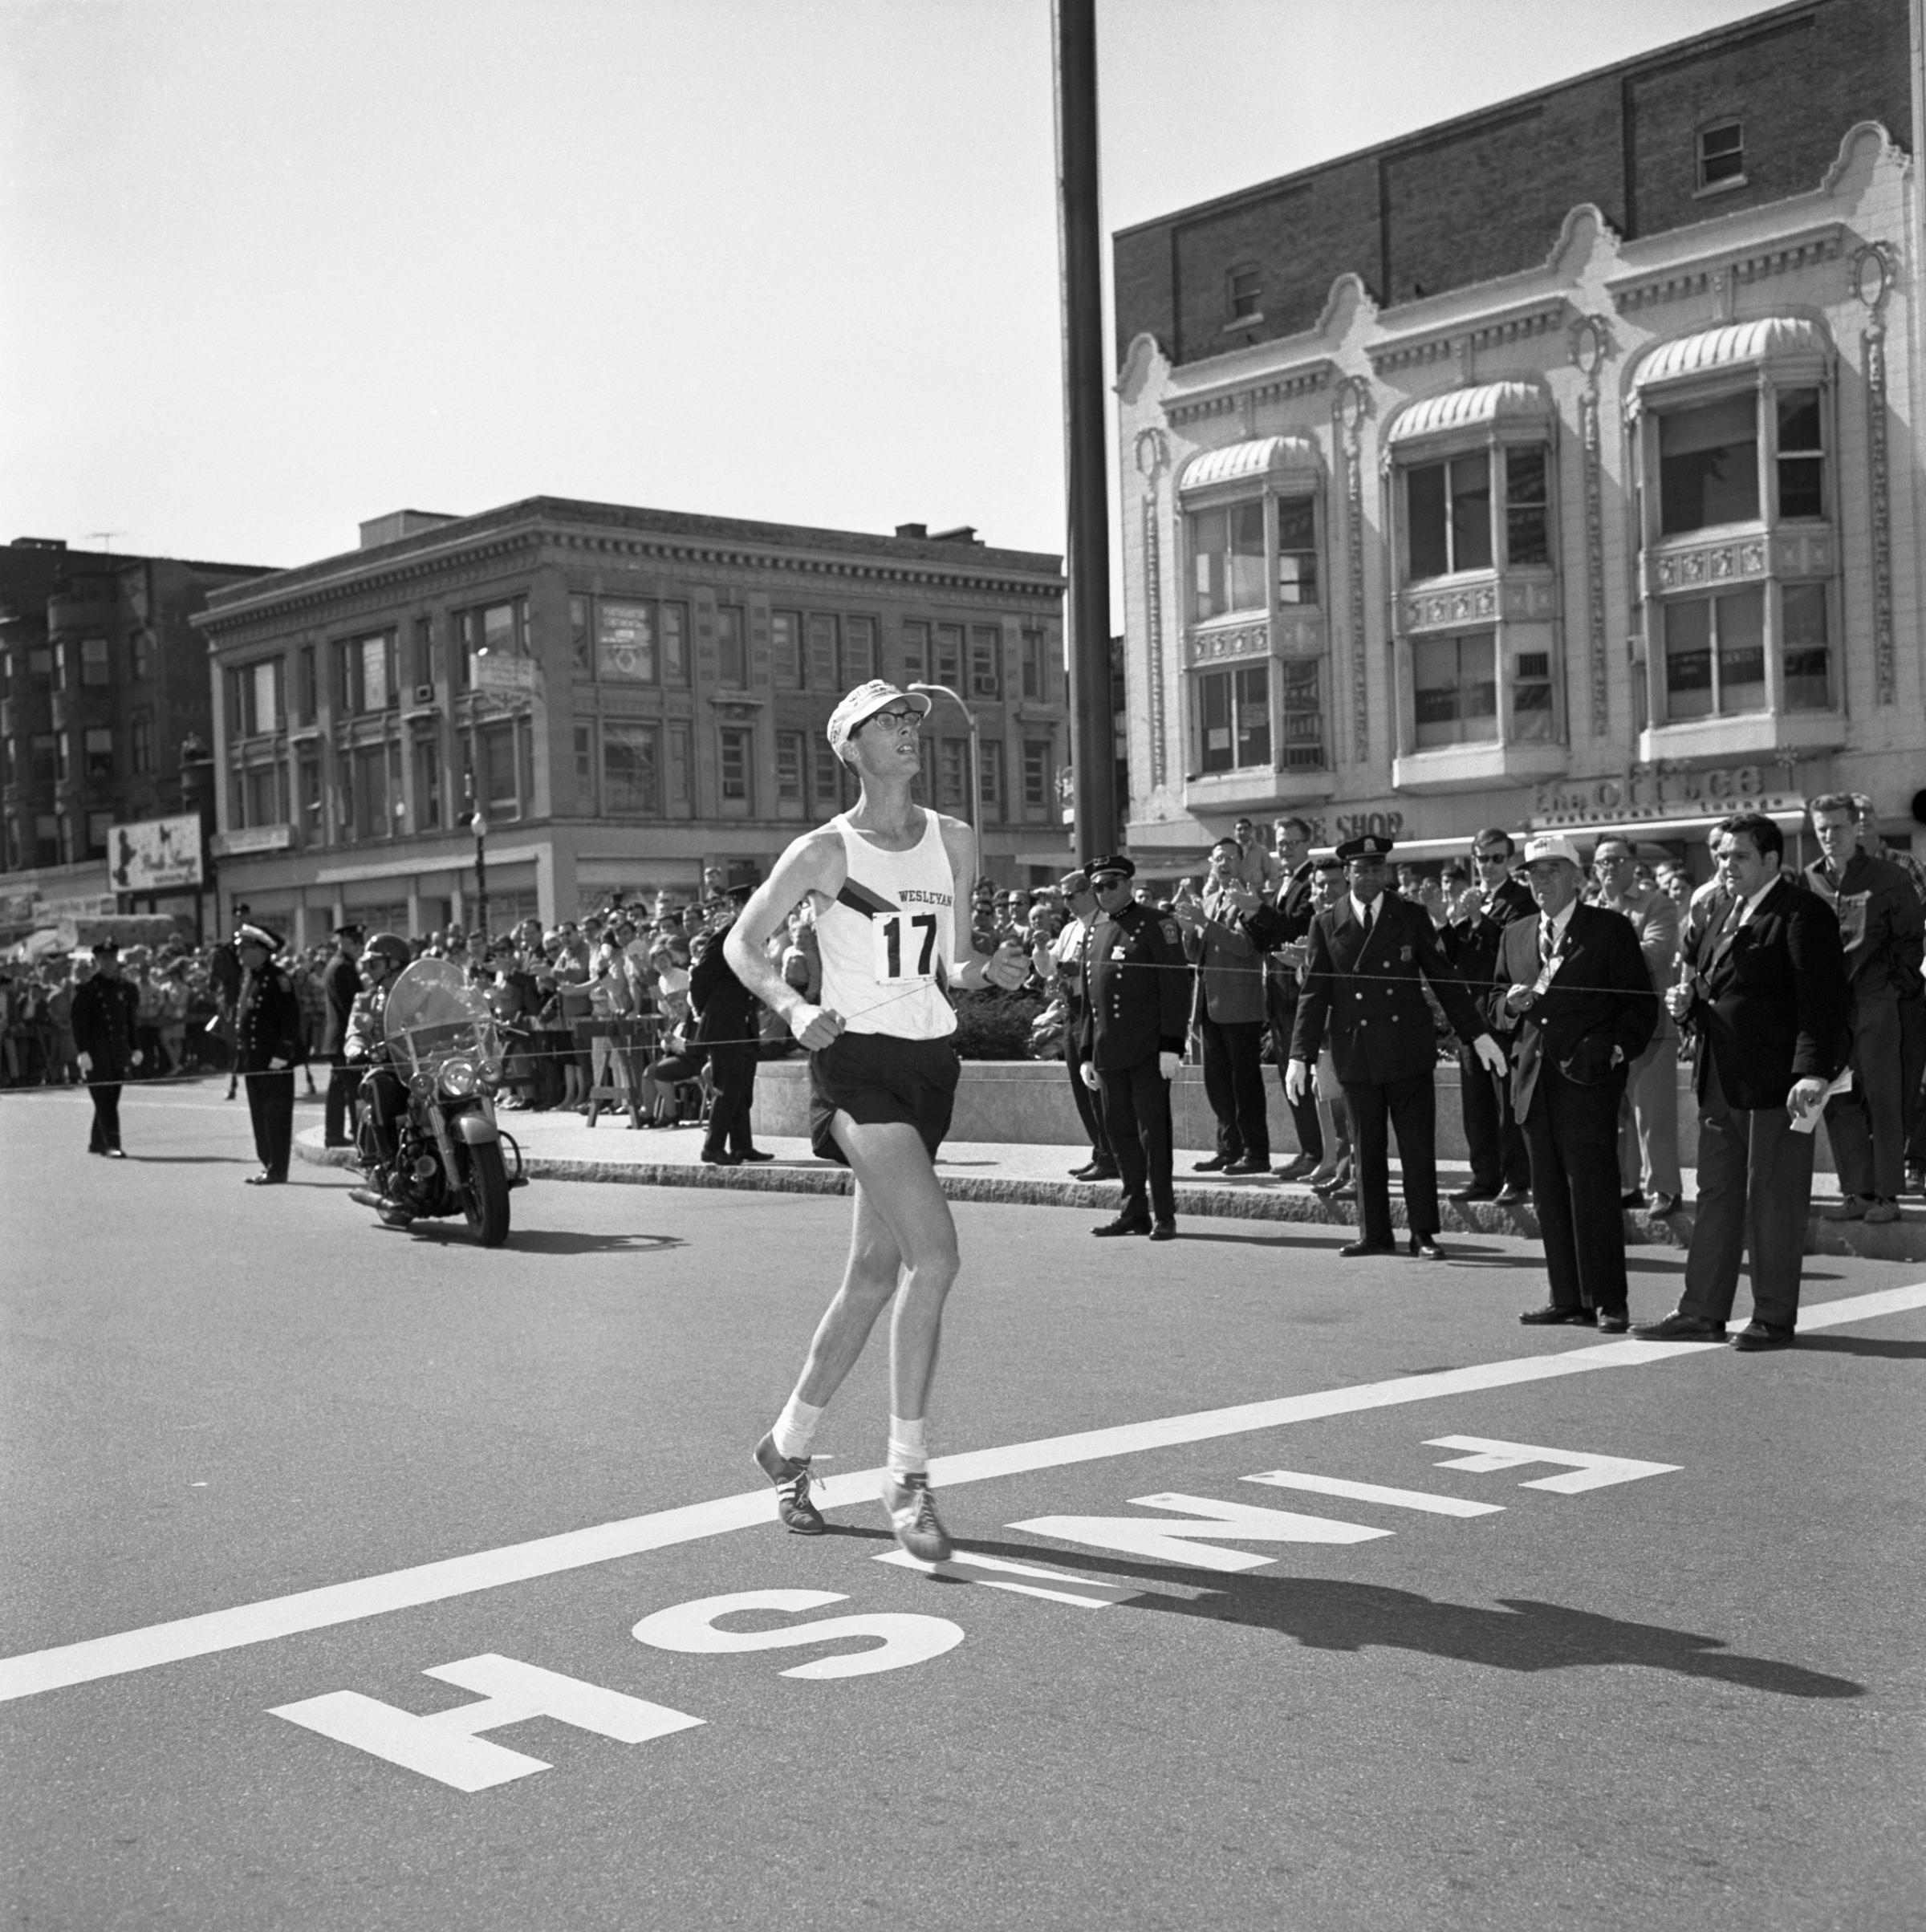 Ambrose Burfoot #17 of Wesleyan University crosses the finish line of 72nd running of the Boston Marathon, 1968.